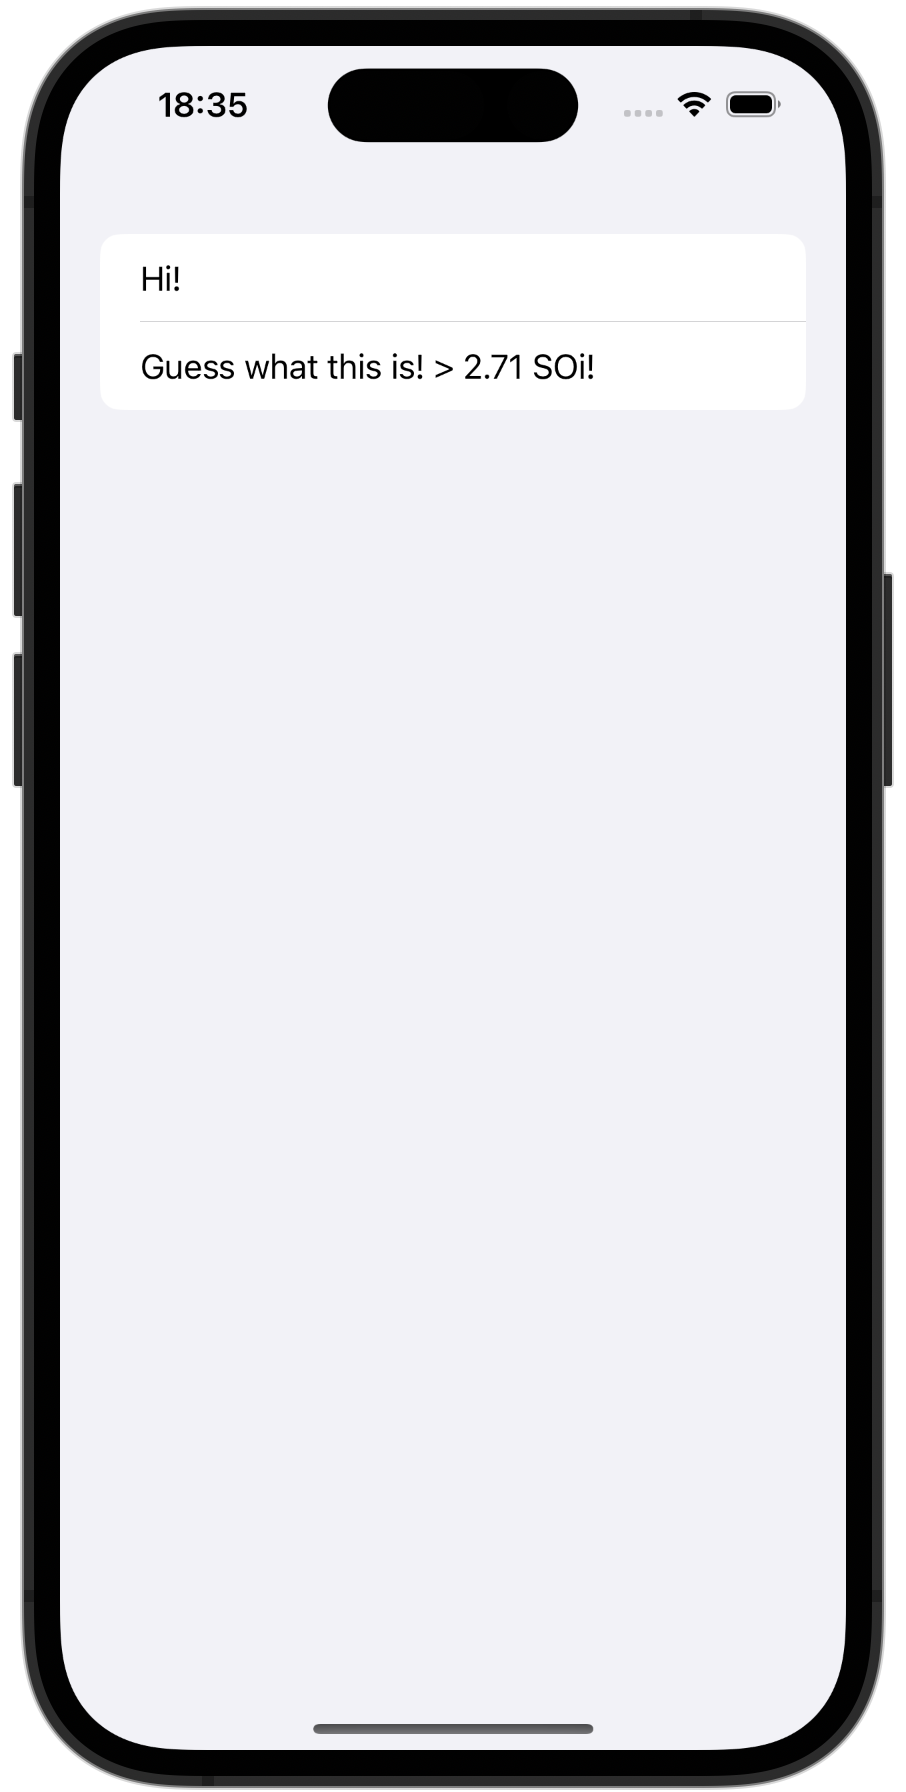 Updated UI of your iOS multiplatform app